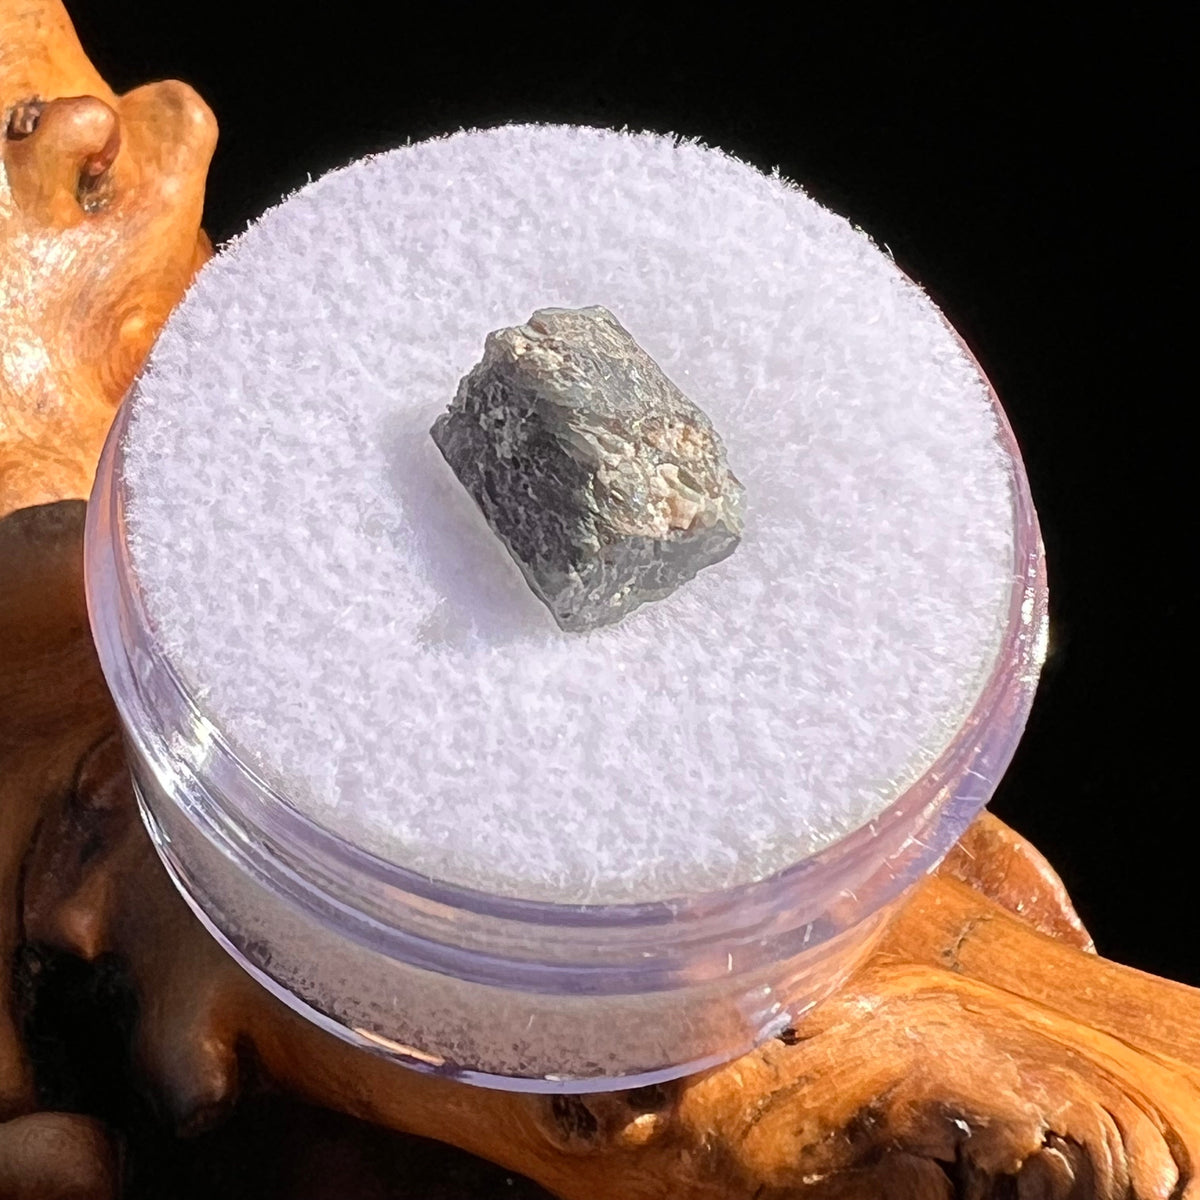 Alexandrite Crystal #21-Moldavite Life